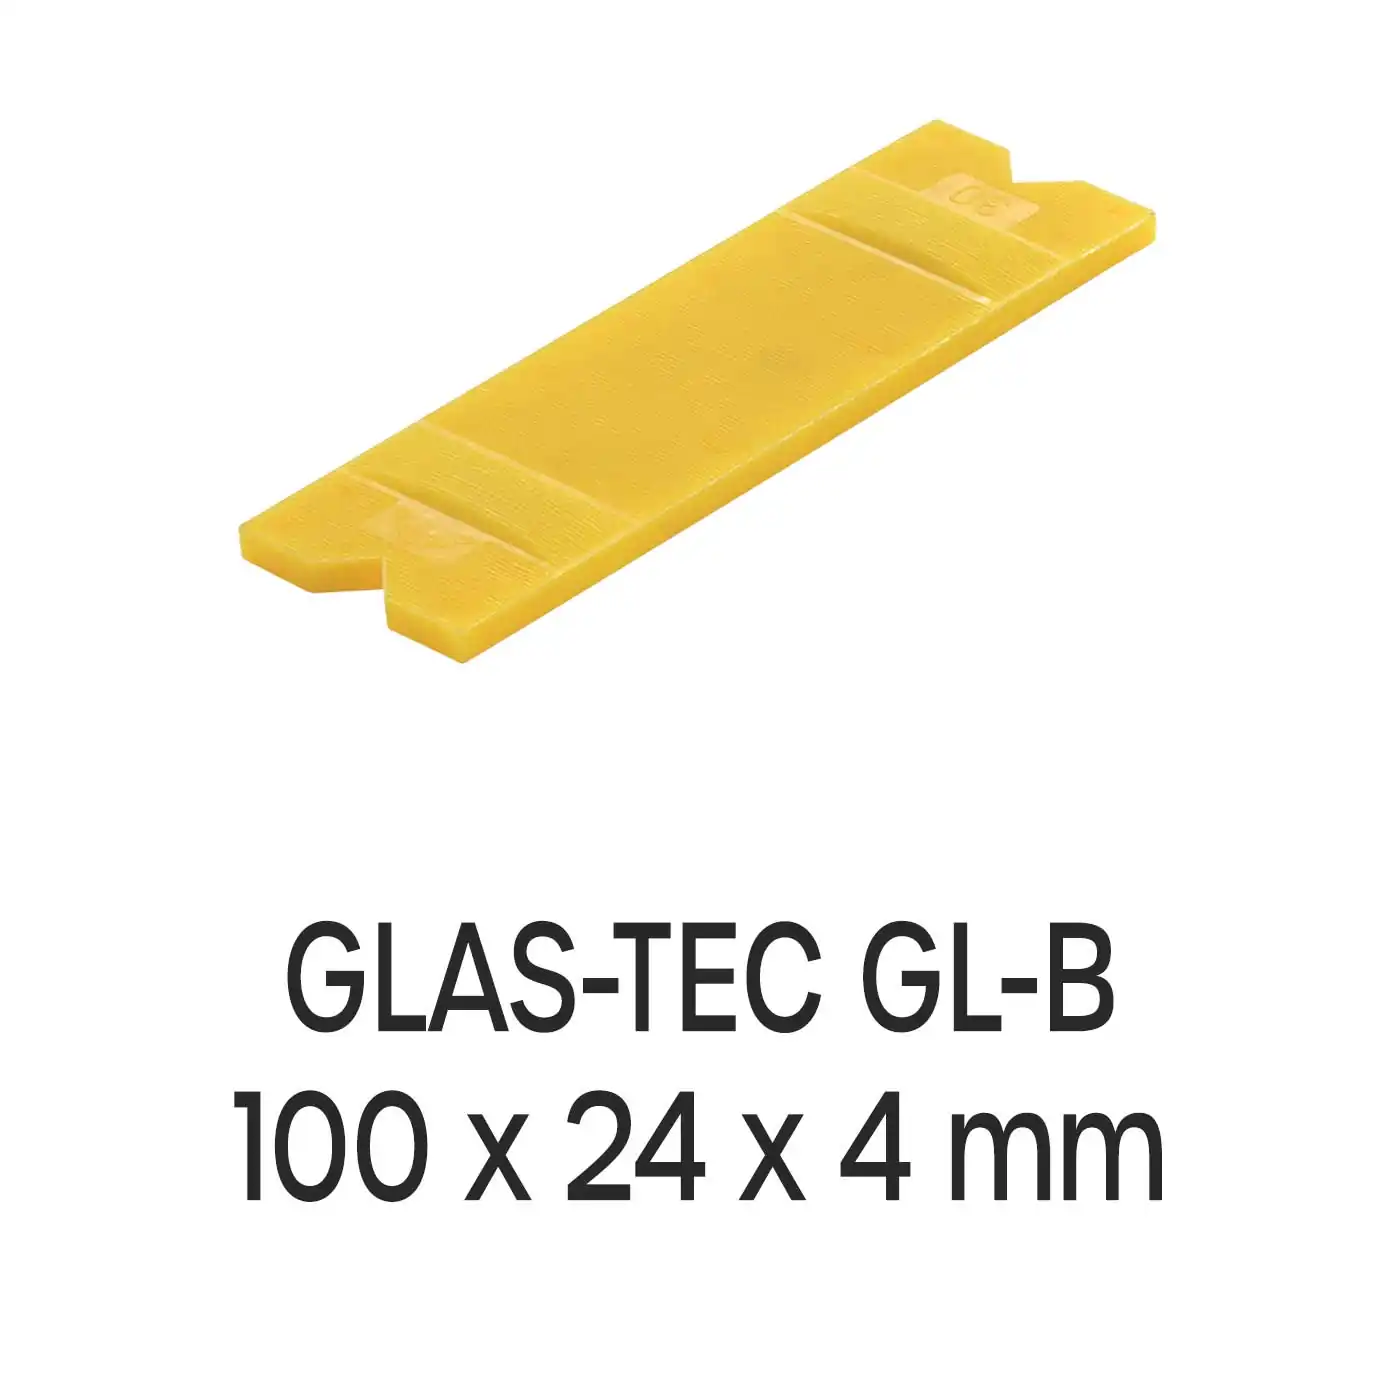 Roto GLAS-TEC GL-B 100 x 24 x 4 mm Verglasungsklötze 1000 Stück